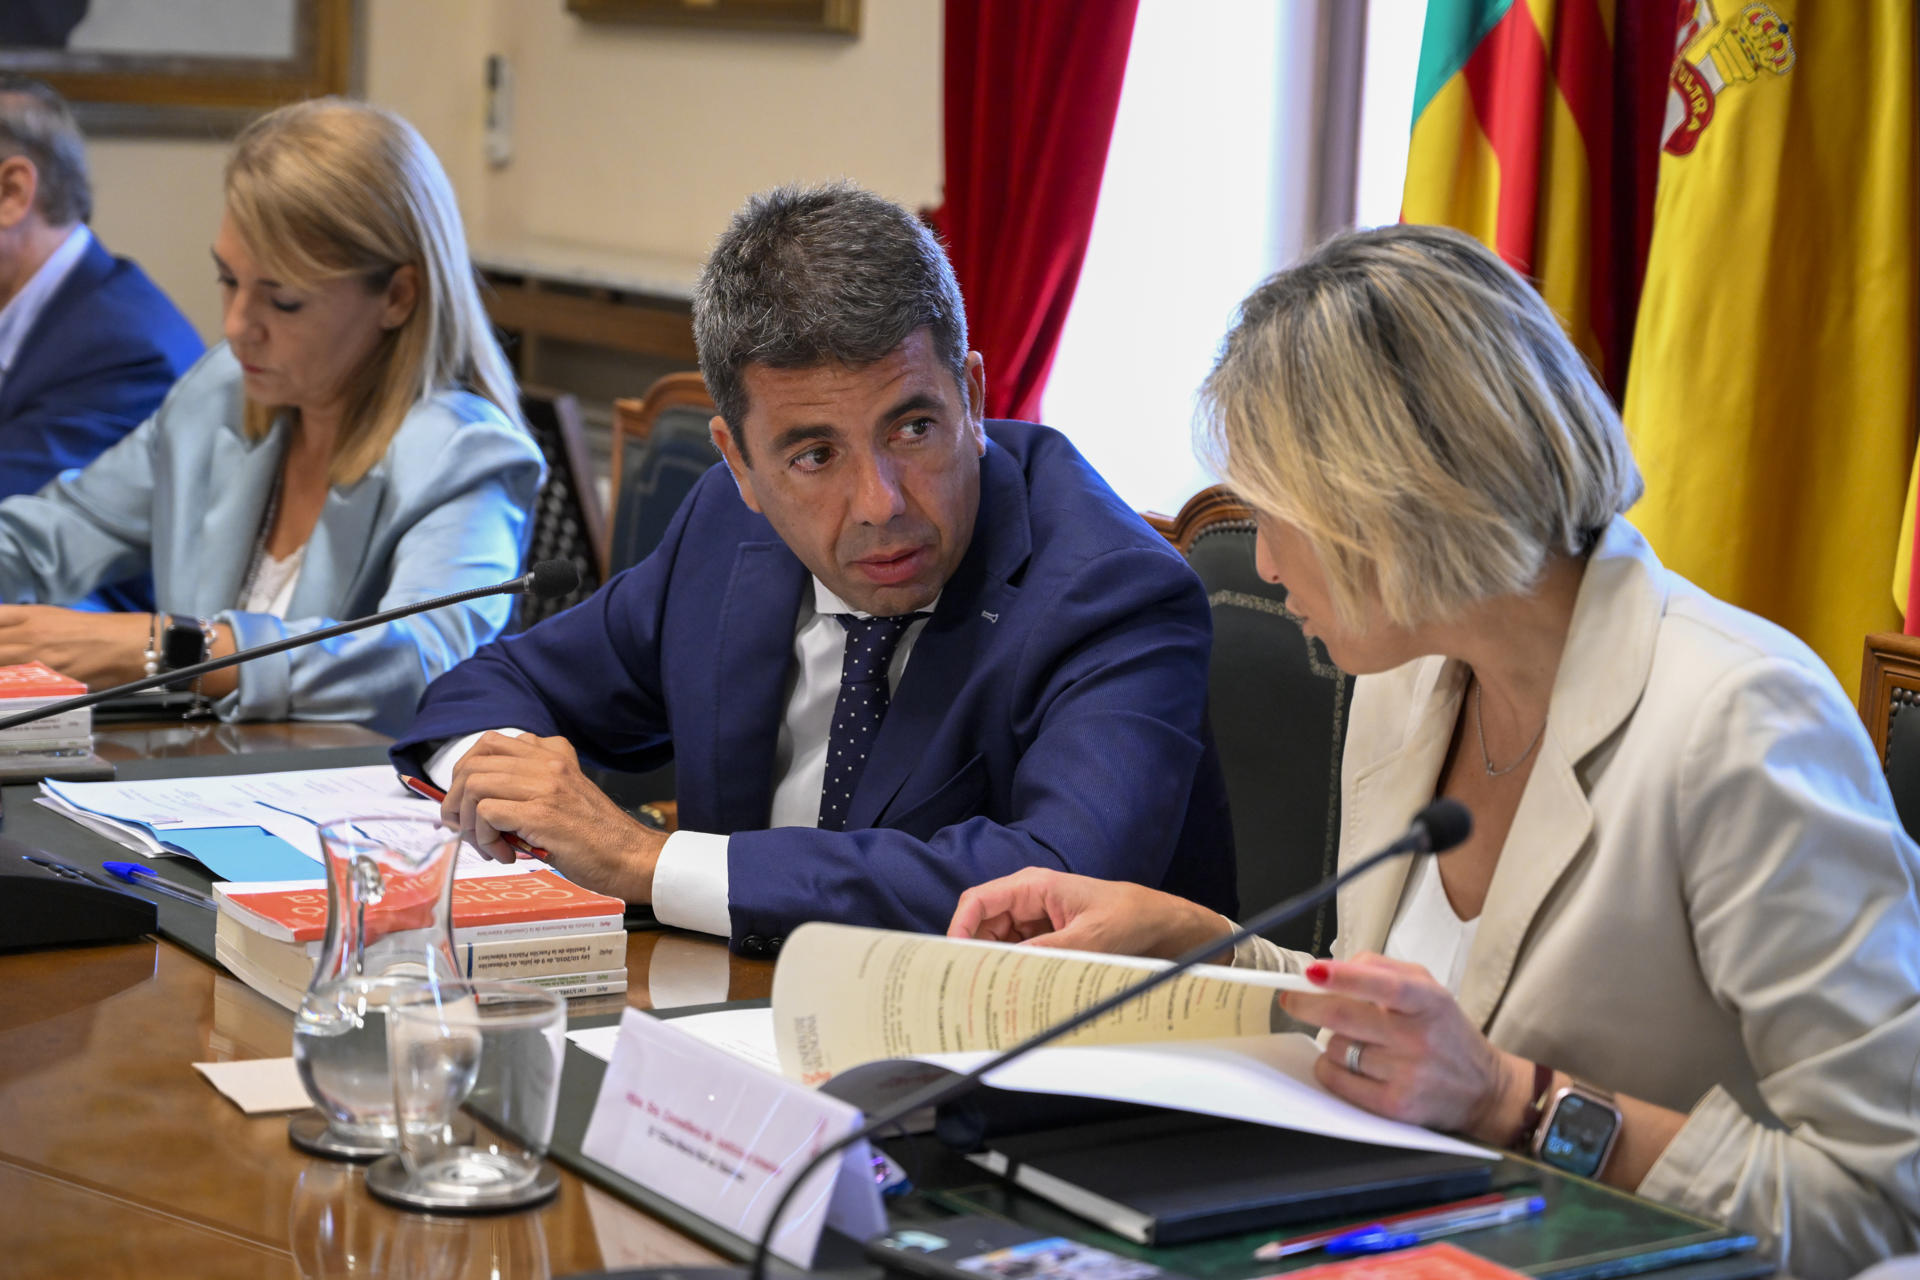 El president de la Generalitat, Carlos Mazón, conversa con la consellera de Justicia e Interior, Elisa Núñez. EFE/Andreu Esteban/Archivo